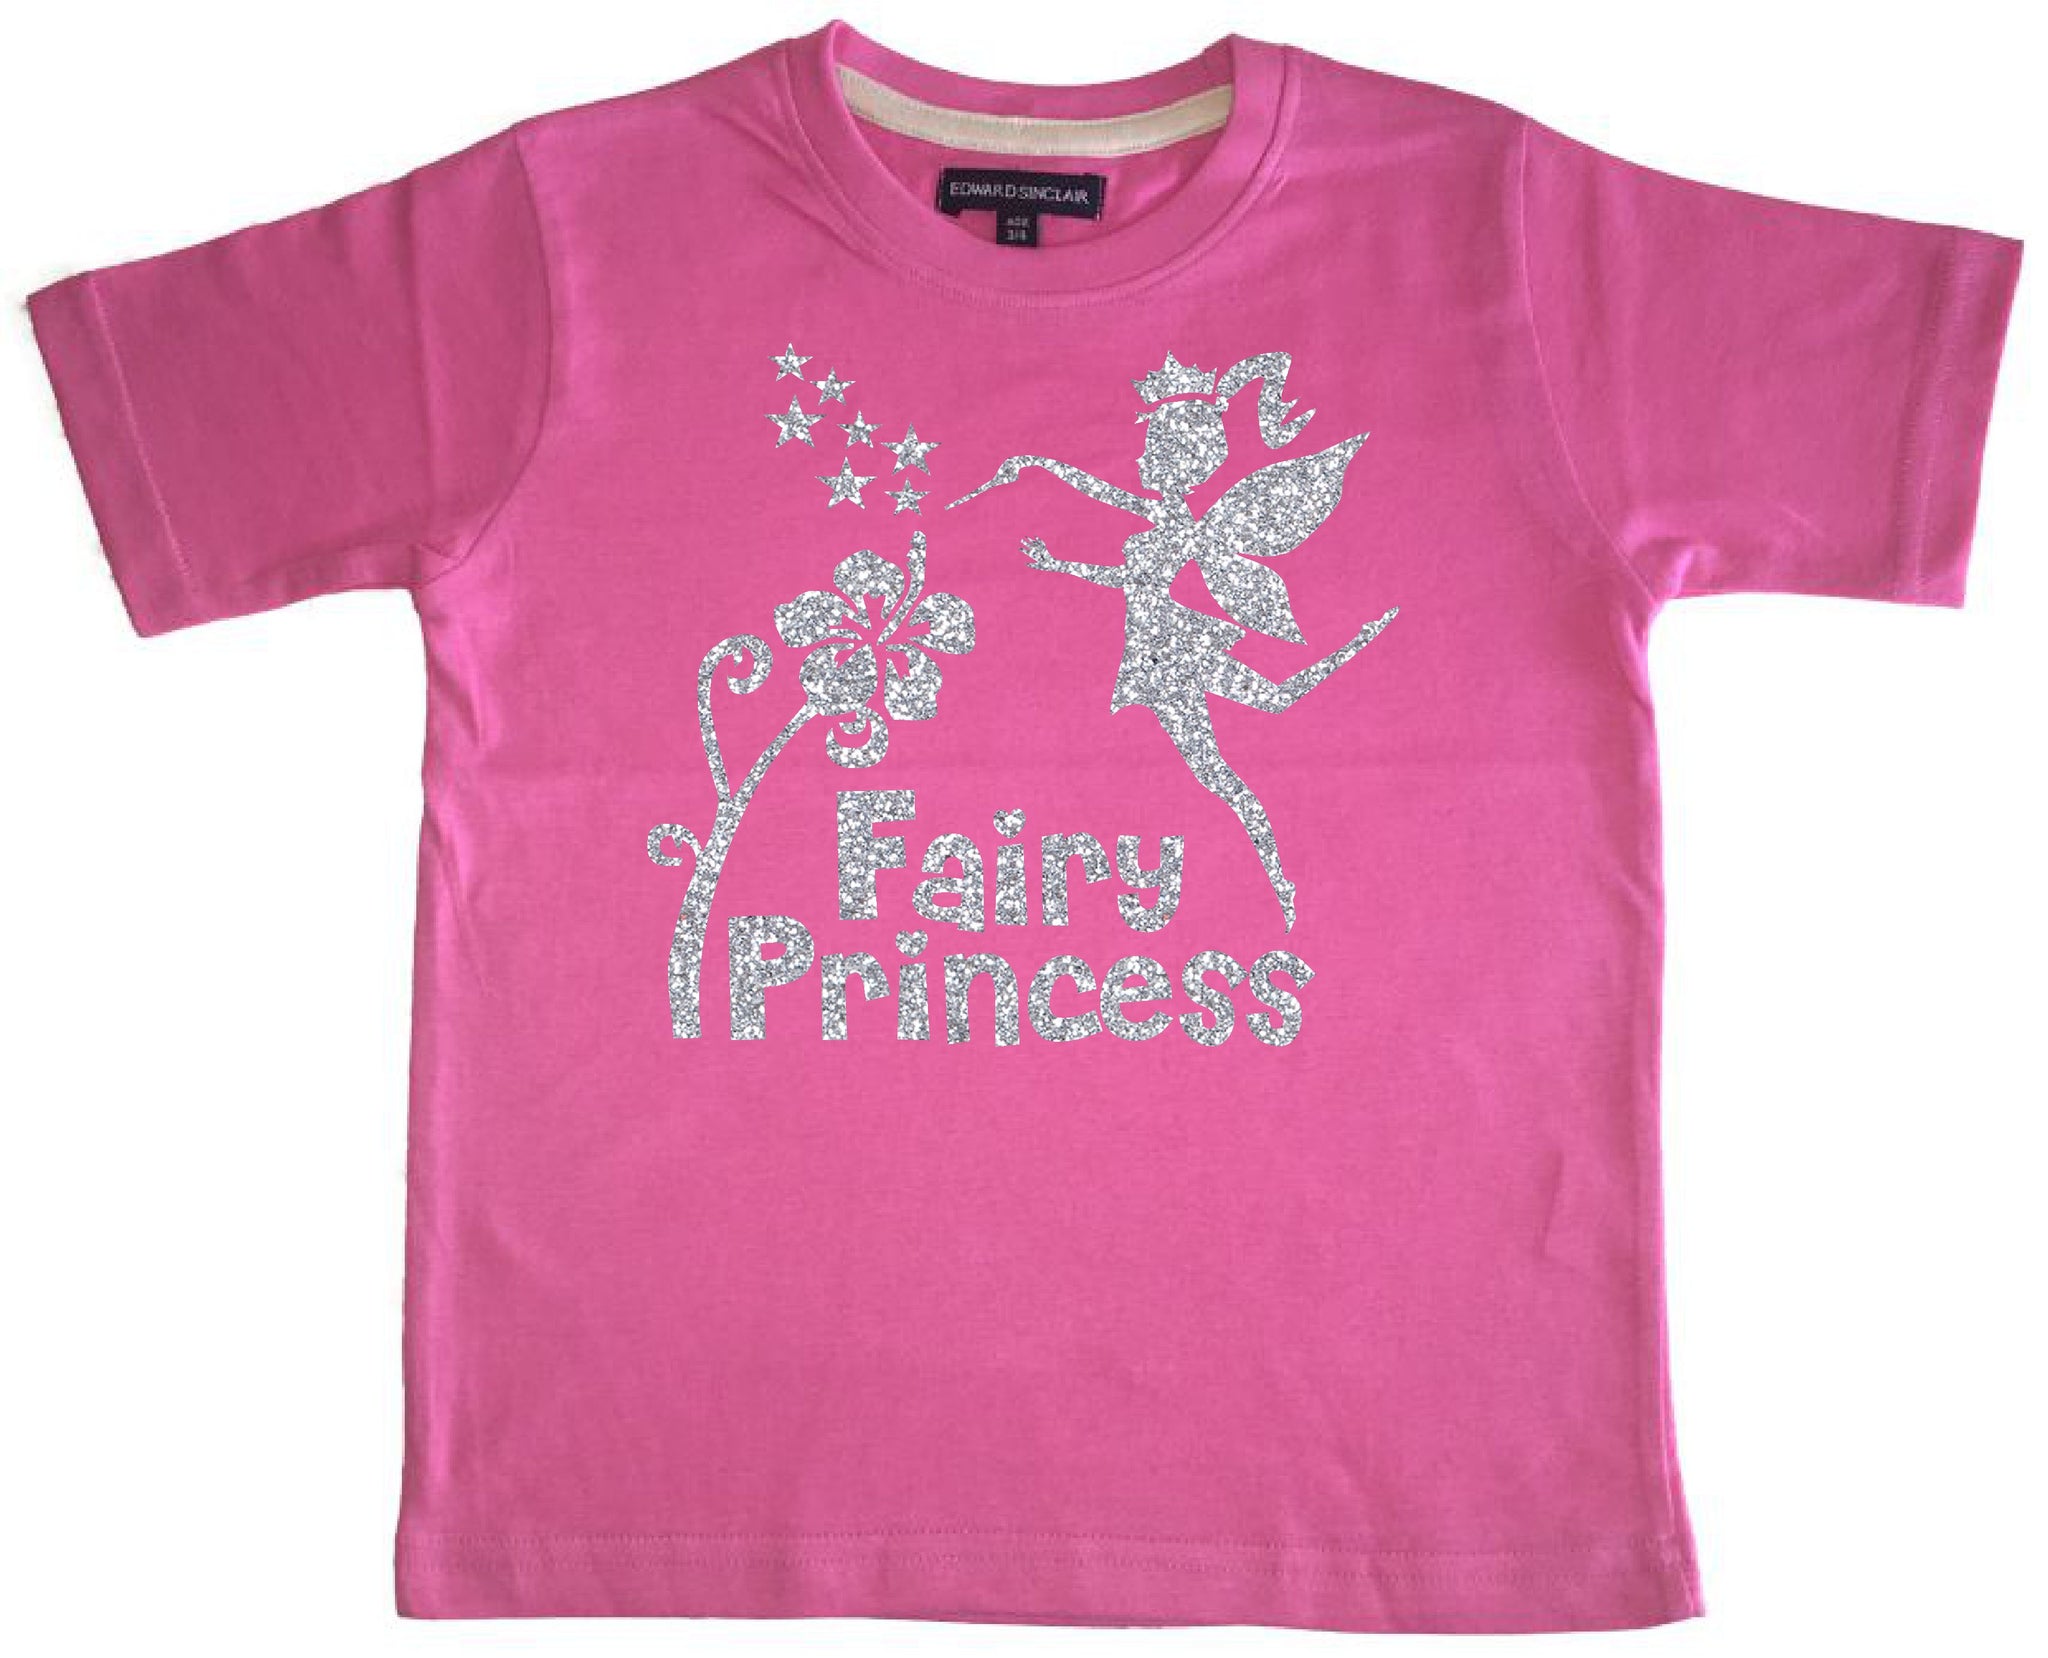 Fairy Princess Children's T-shirt